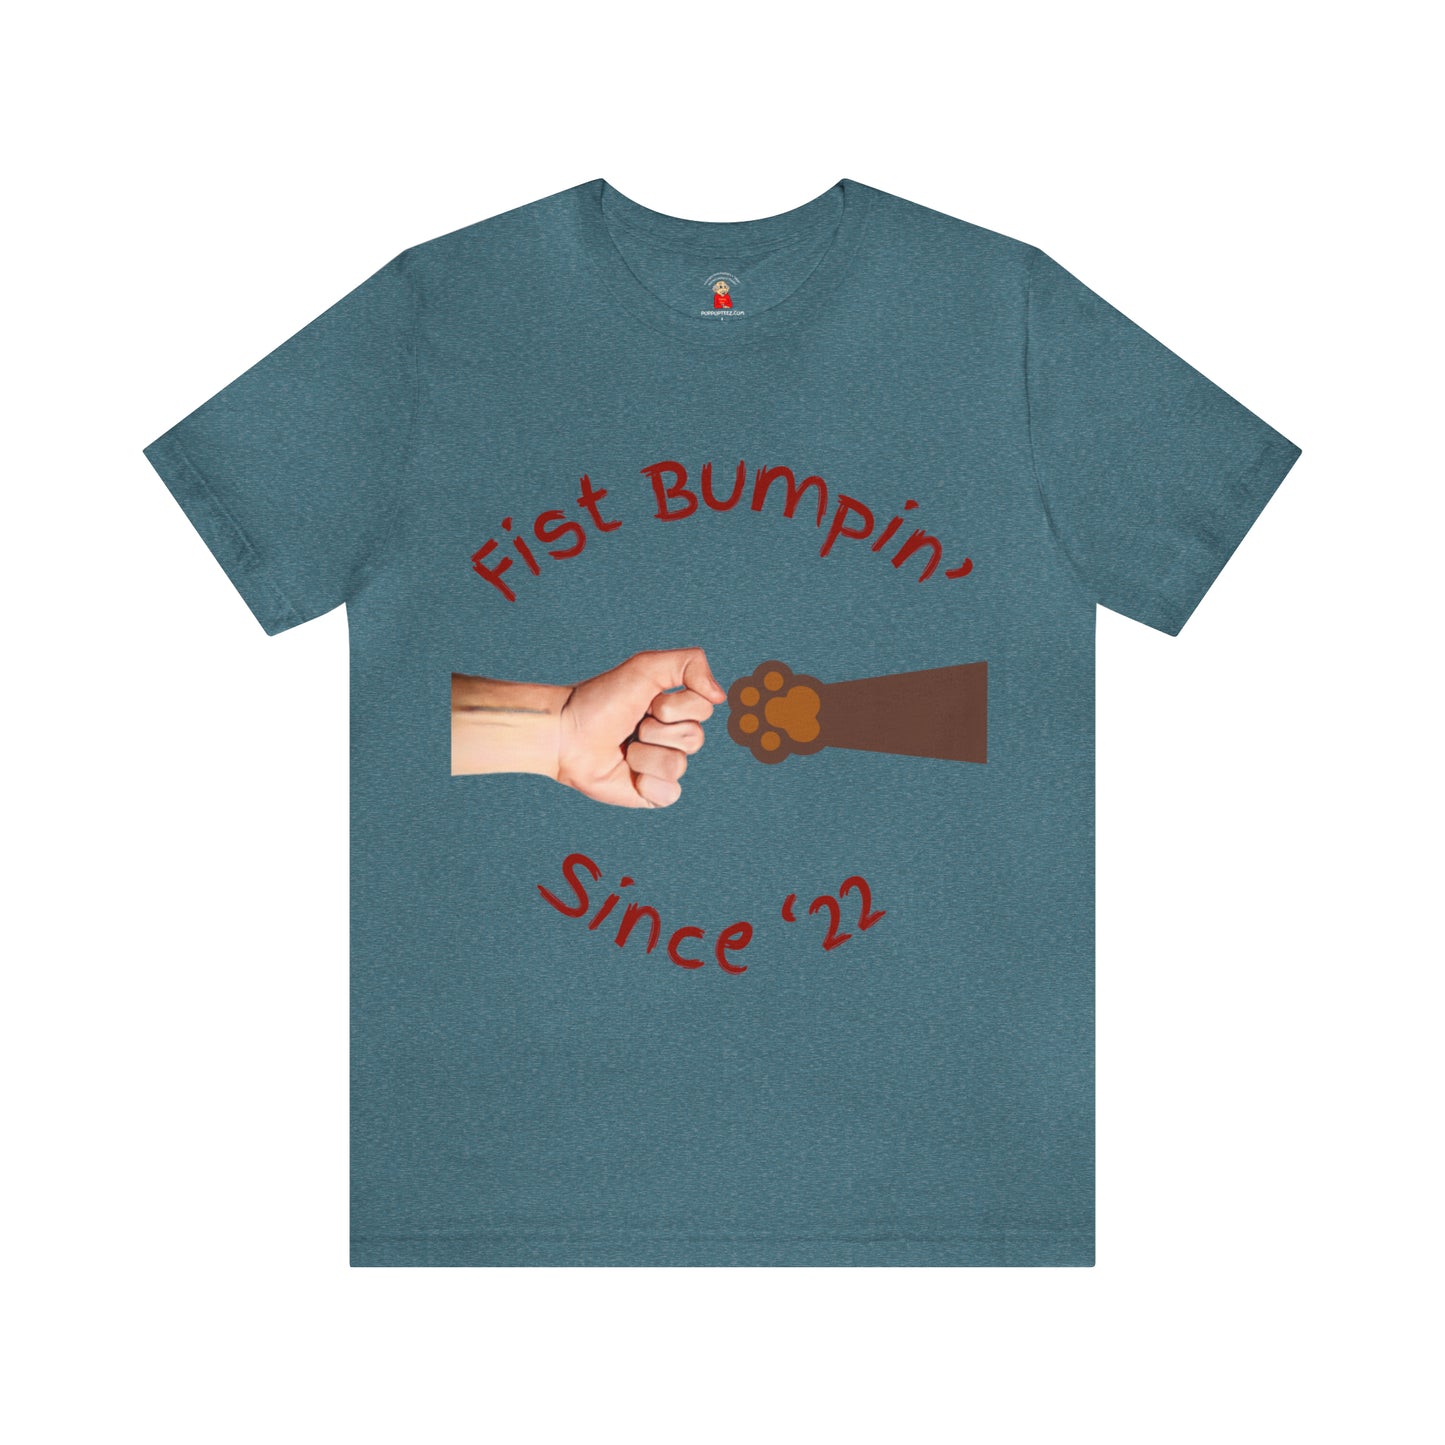 Fist Bumpin Since ‘22 Chocolate Paw Unisex Jersey Short Sleeve Tee